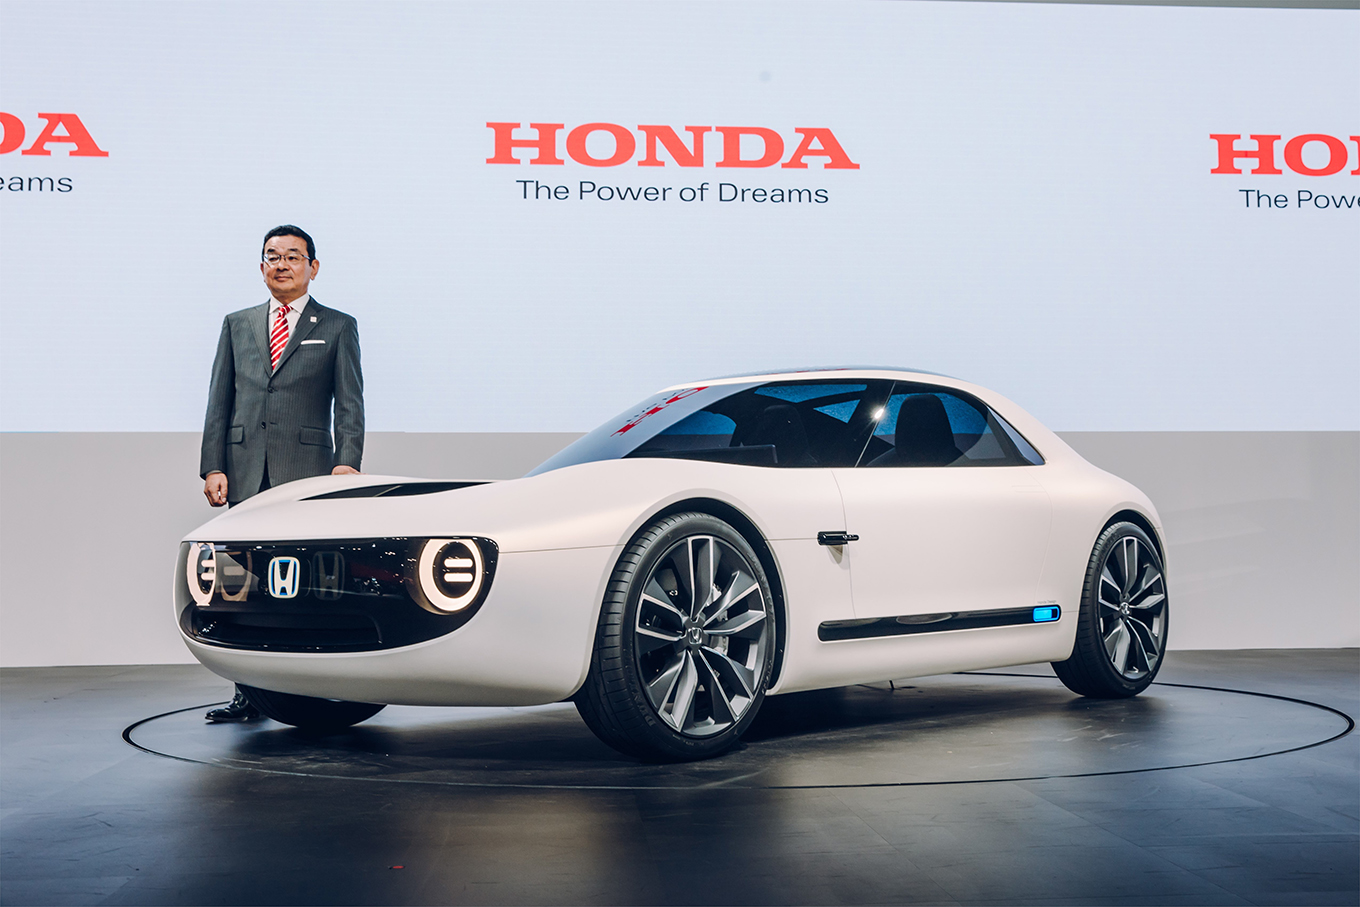 Токио 2017: Honda нашла рецепт успешного электромобиля